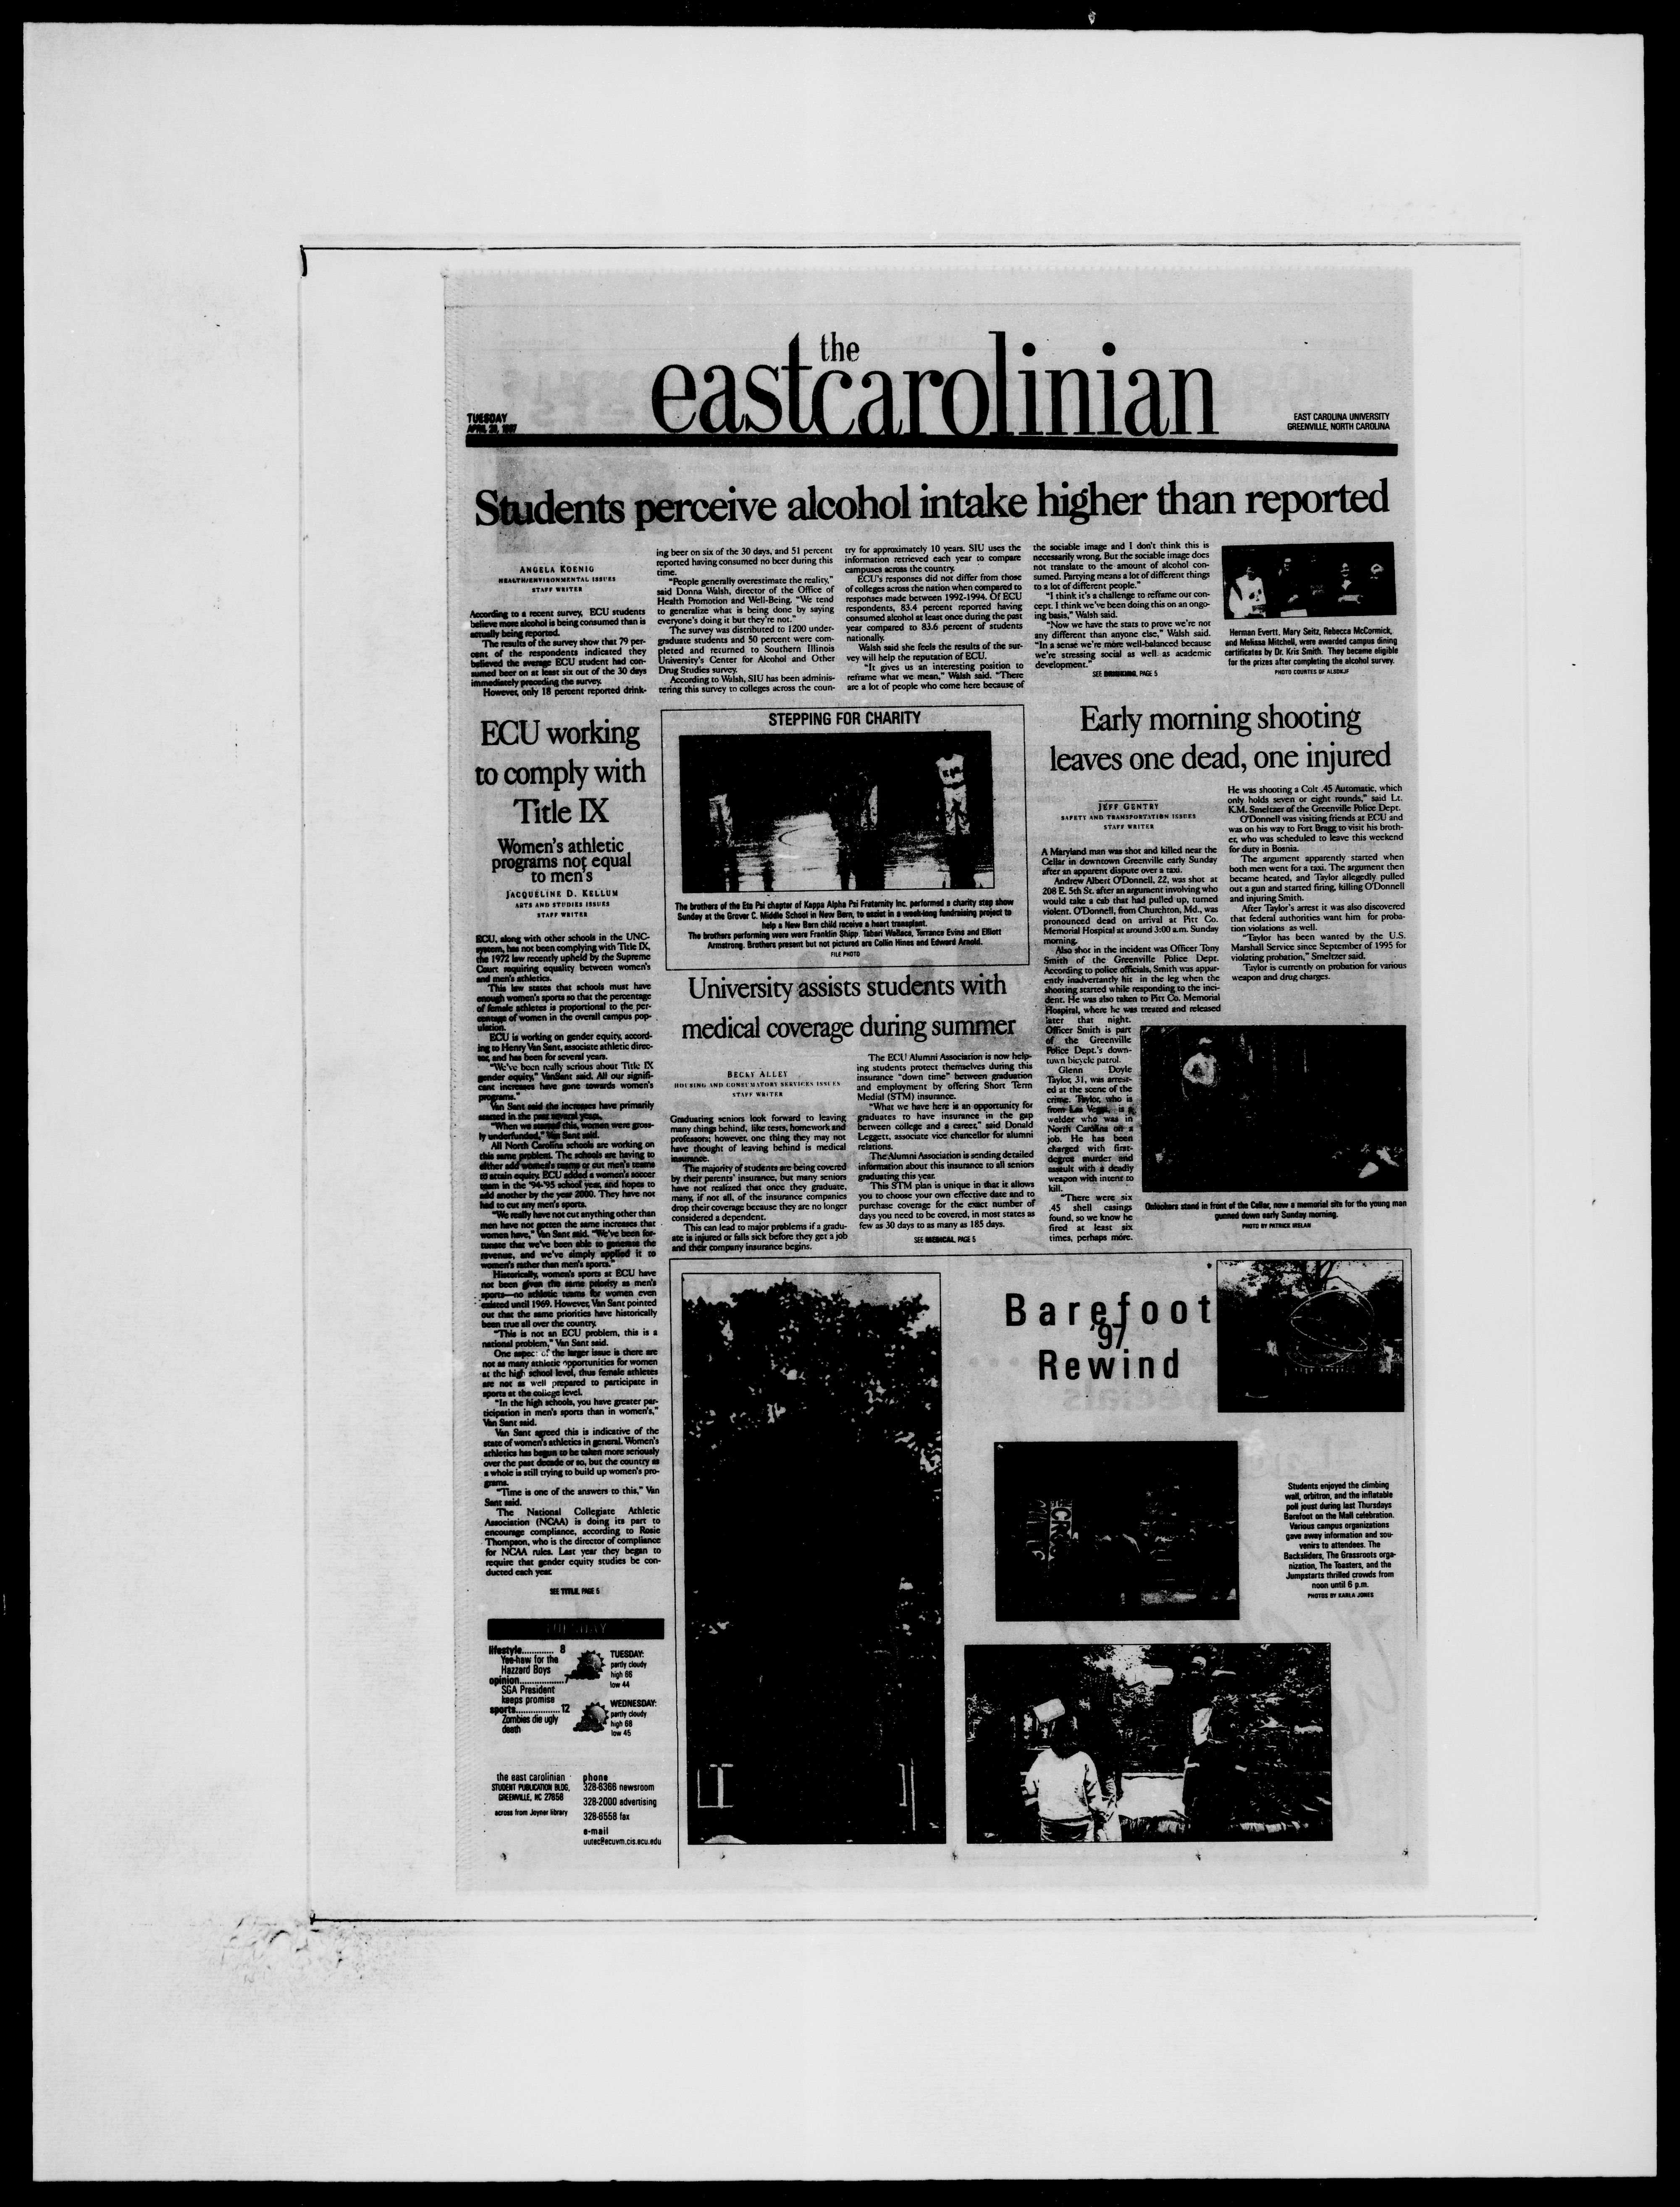 The East Carolinian, April 29, 1997 pic